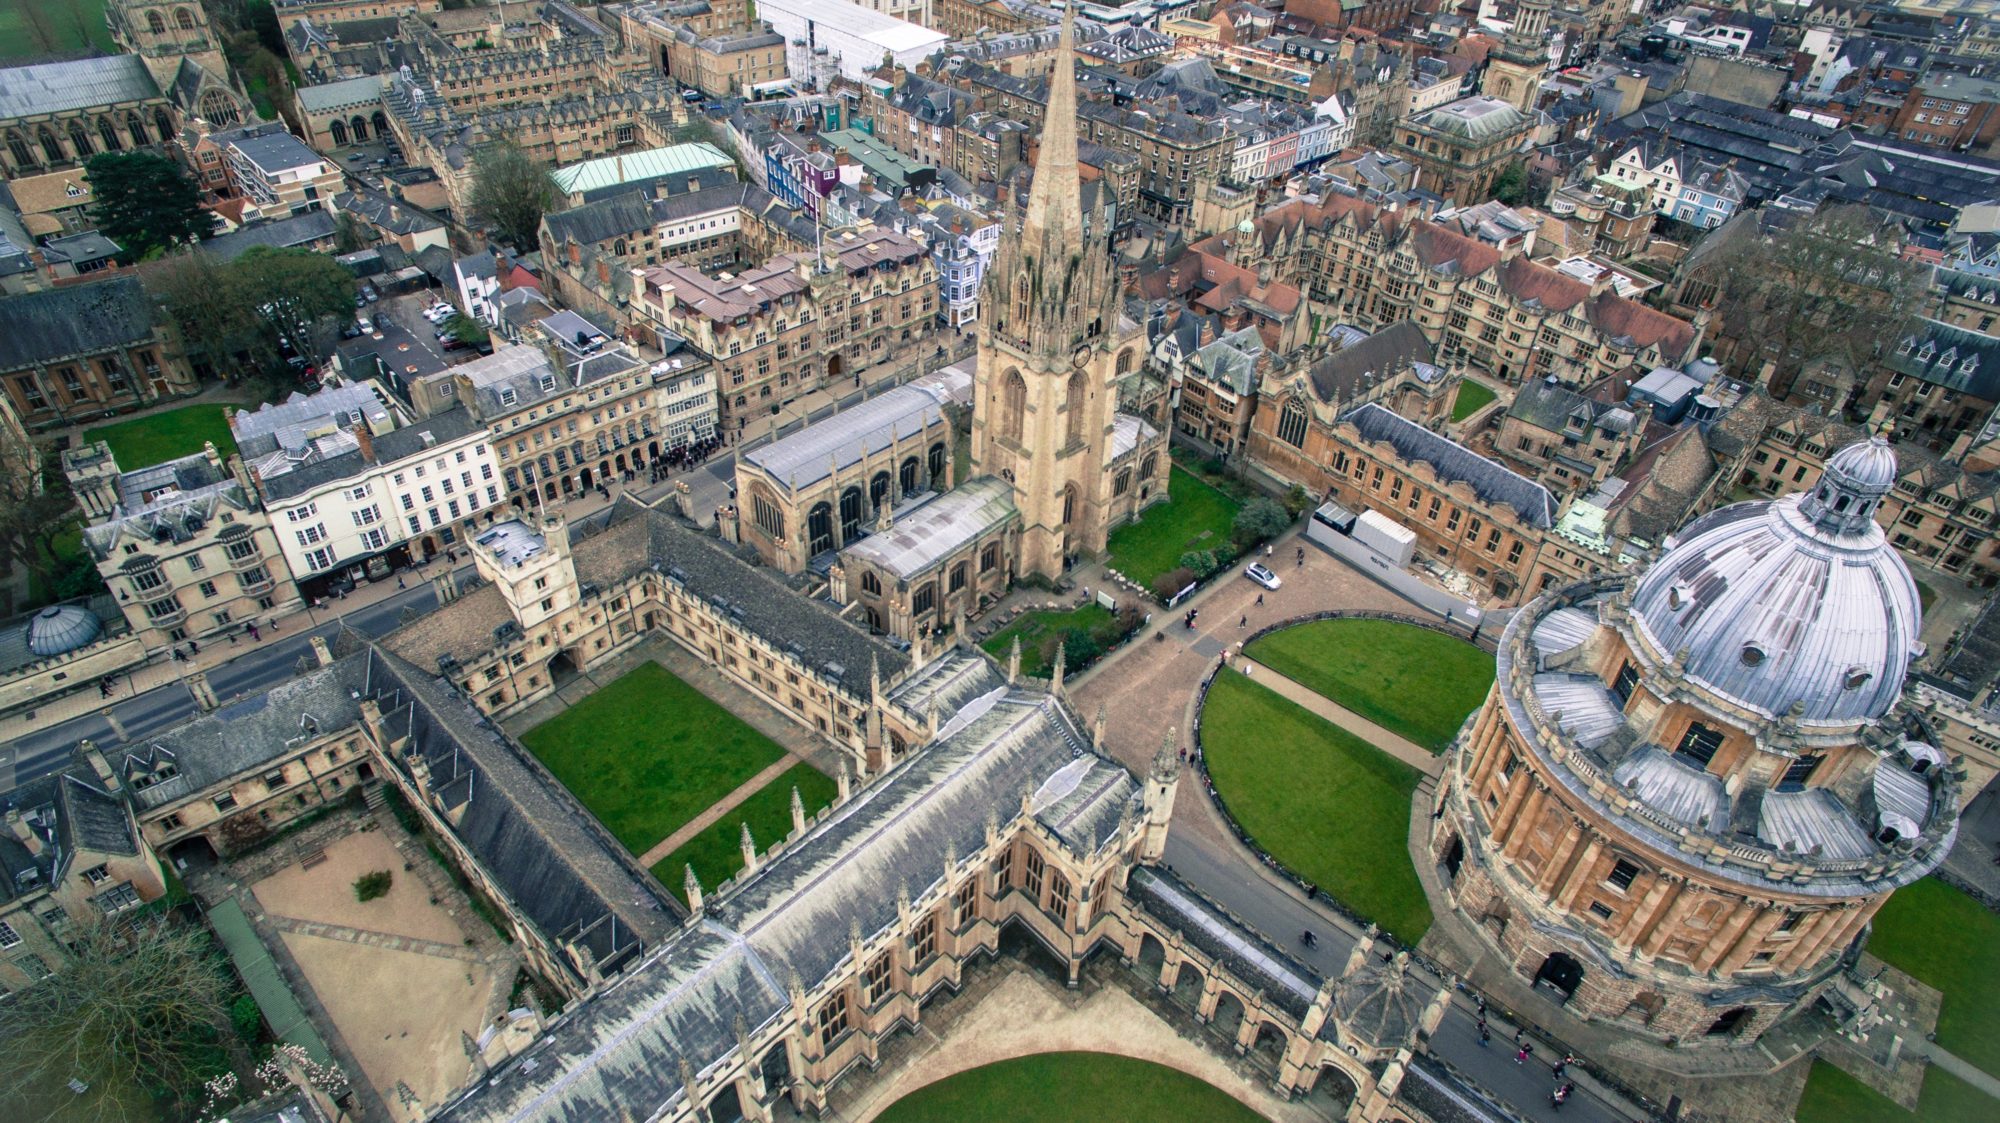 University of Oxford, Oxford, United Kingdom